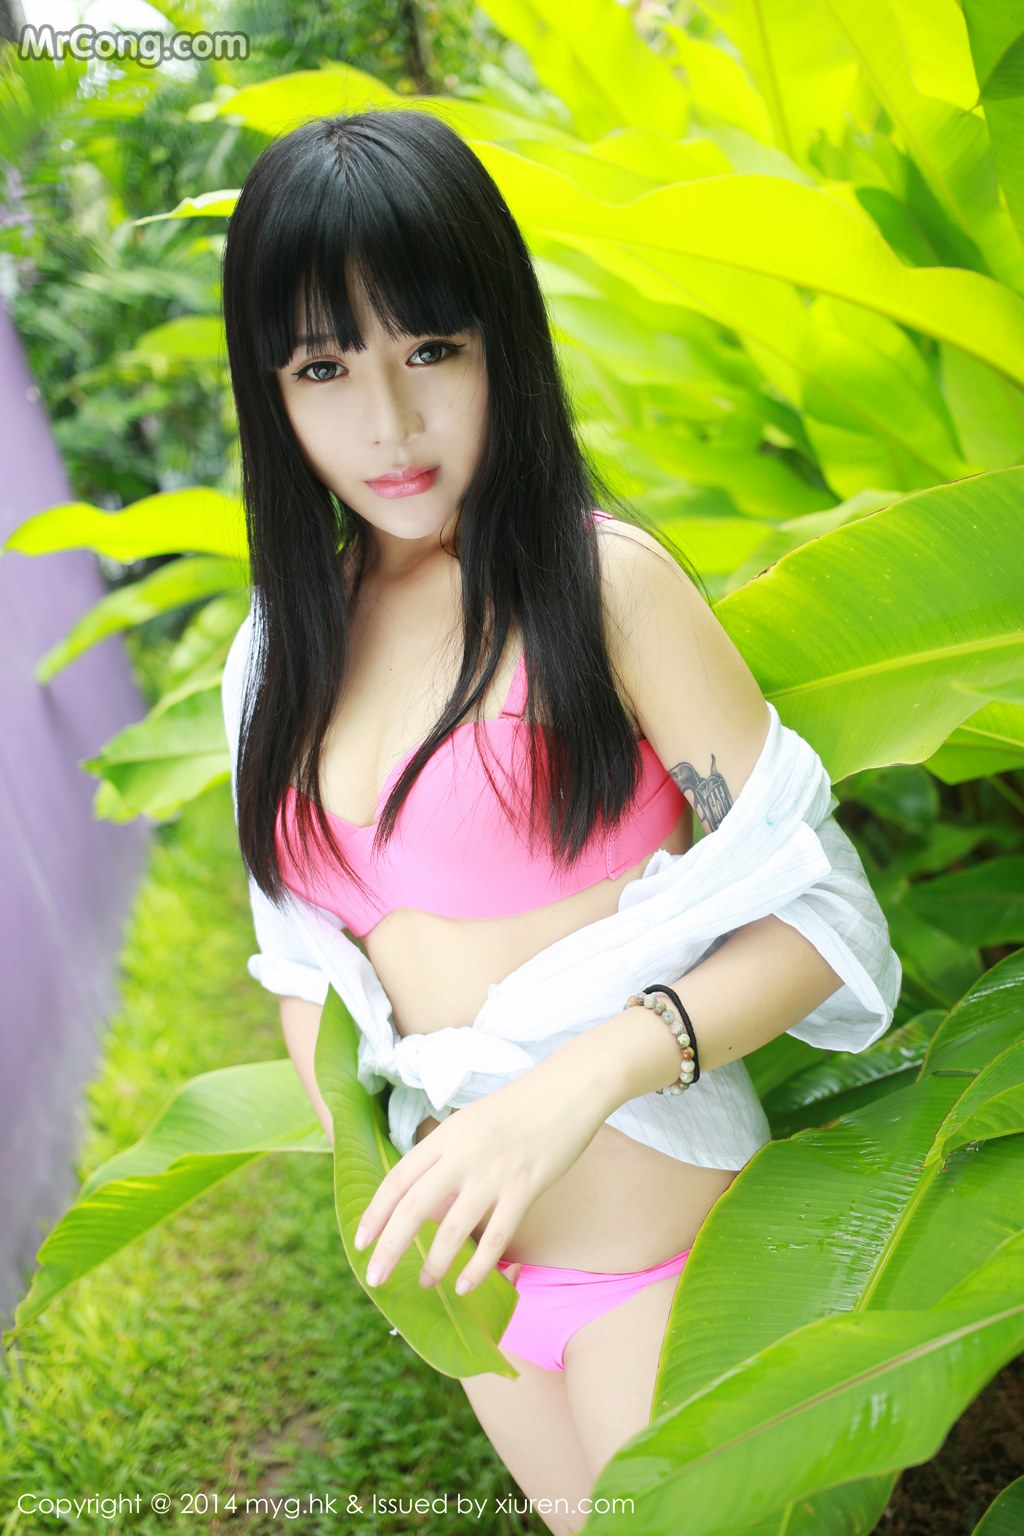 MyGirl Vol.022: Model Ba Bao icey (八宝 icey) (66 pictures) photo 1-3